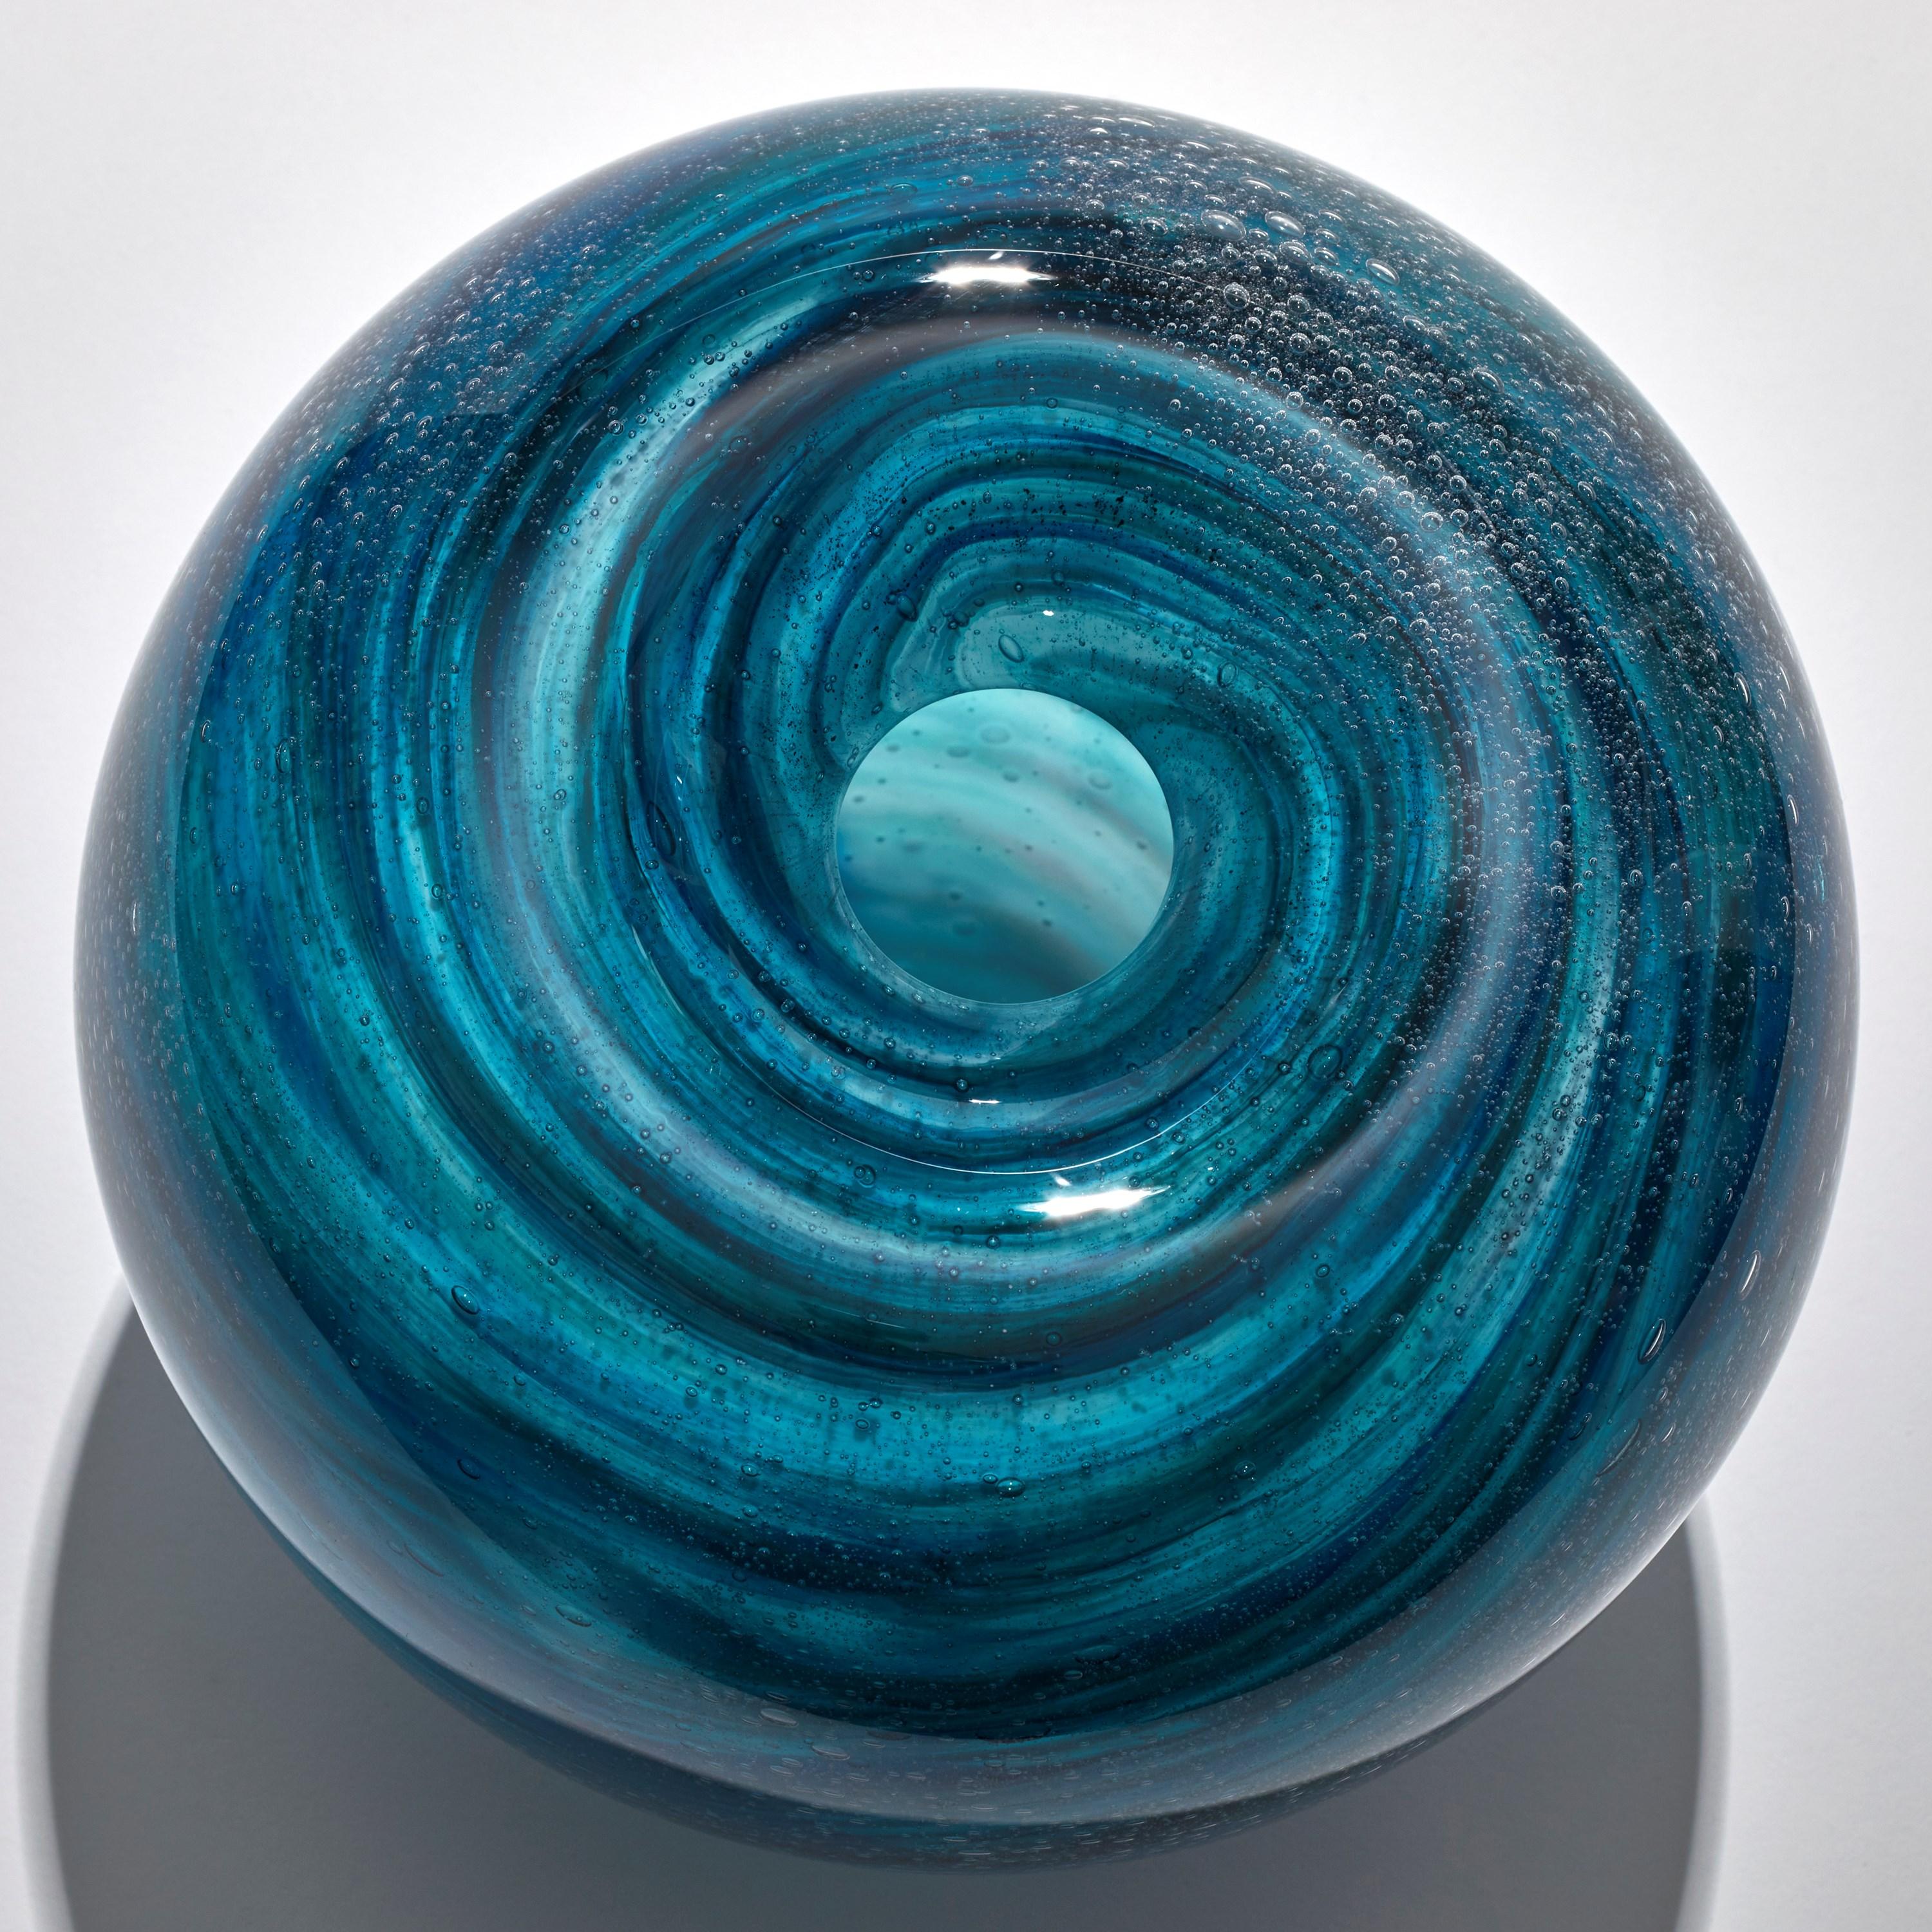 Organic Modern Maelstrom, Blue & Aqua Glass Sculptural Centrepiece by Cathryn Shilling For Sale